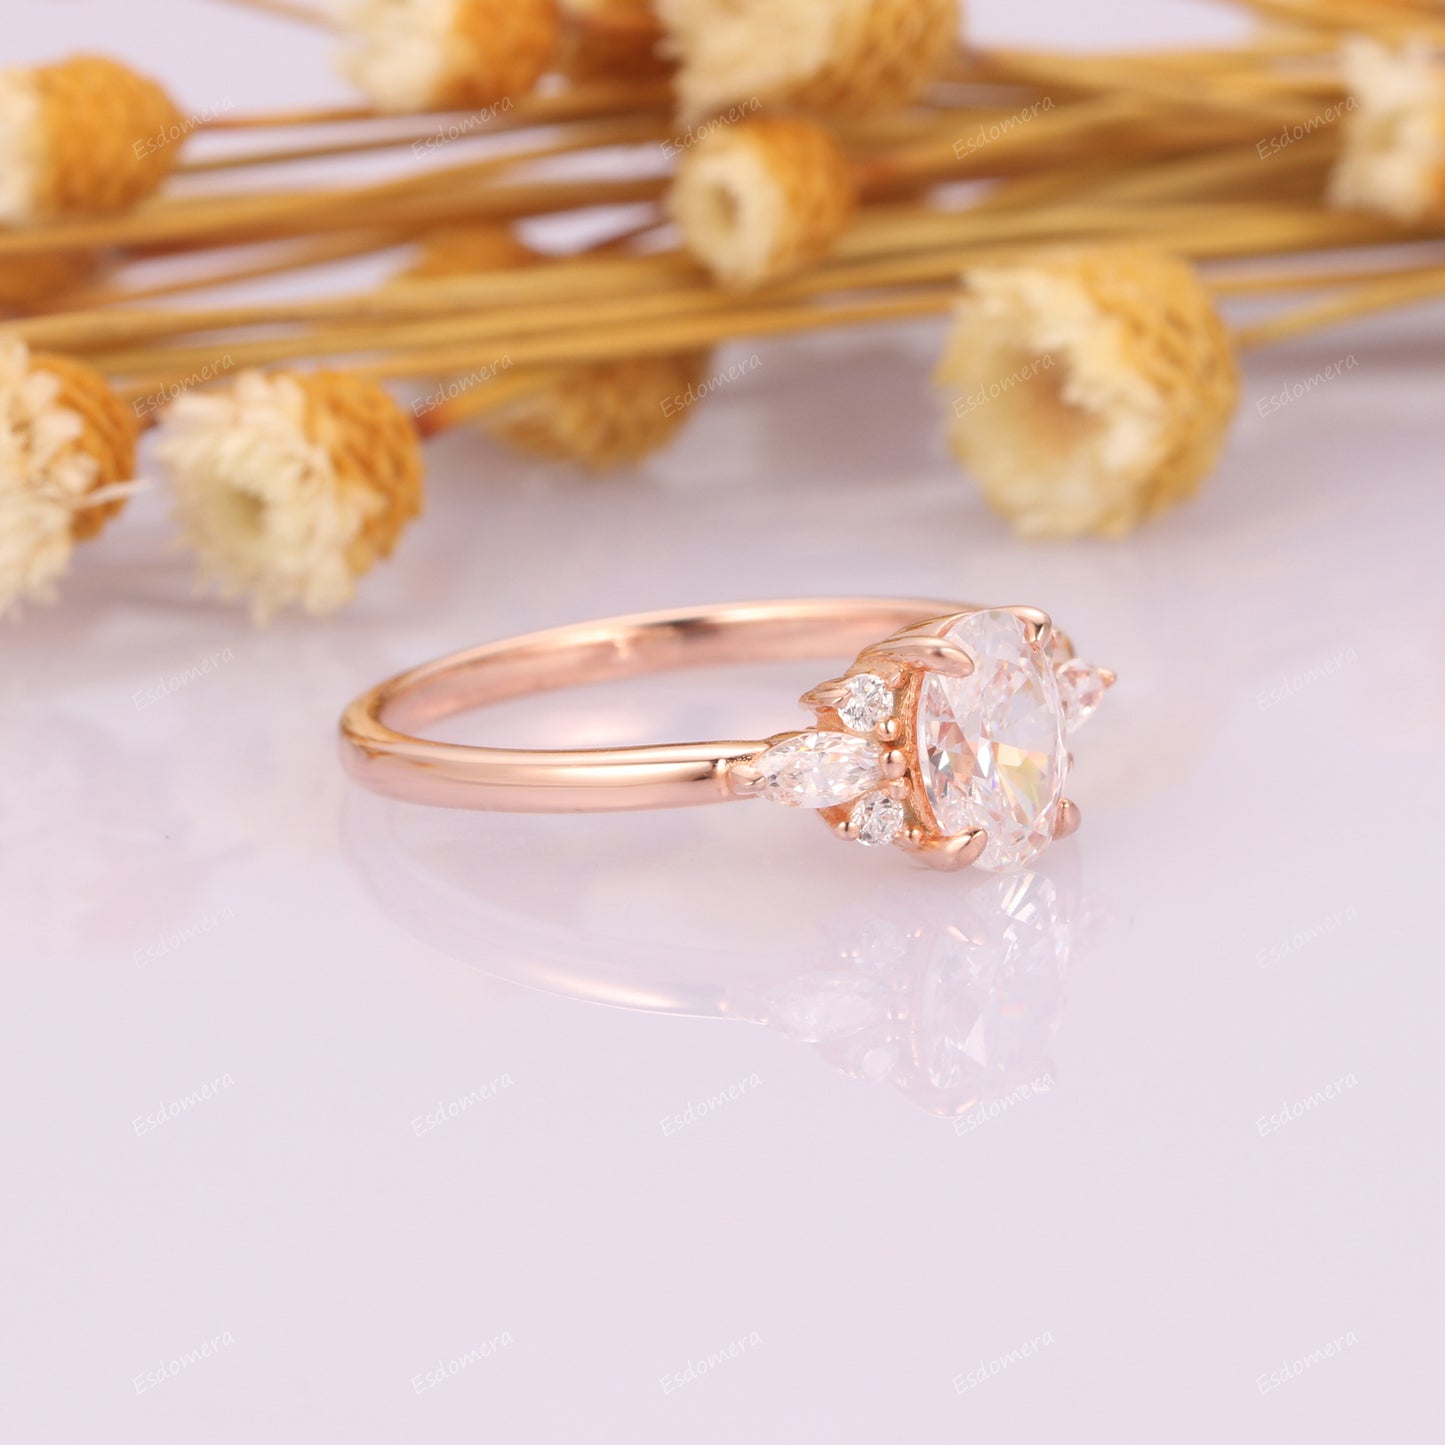 1CT 5x7mm Oval Cut Moissanite Engagement Ring, Art Deco Bridal Wedding Ring, 14k Rose Gold Promise Ring